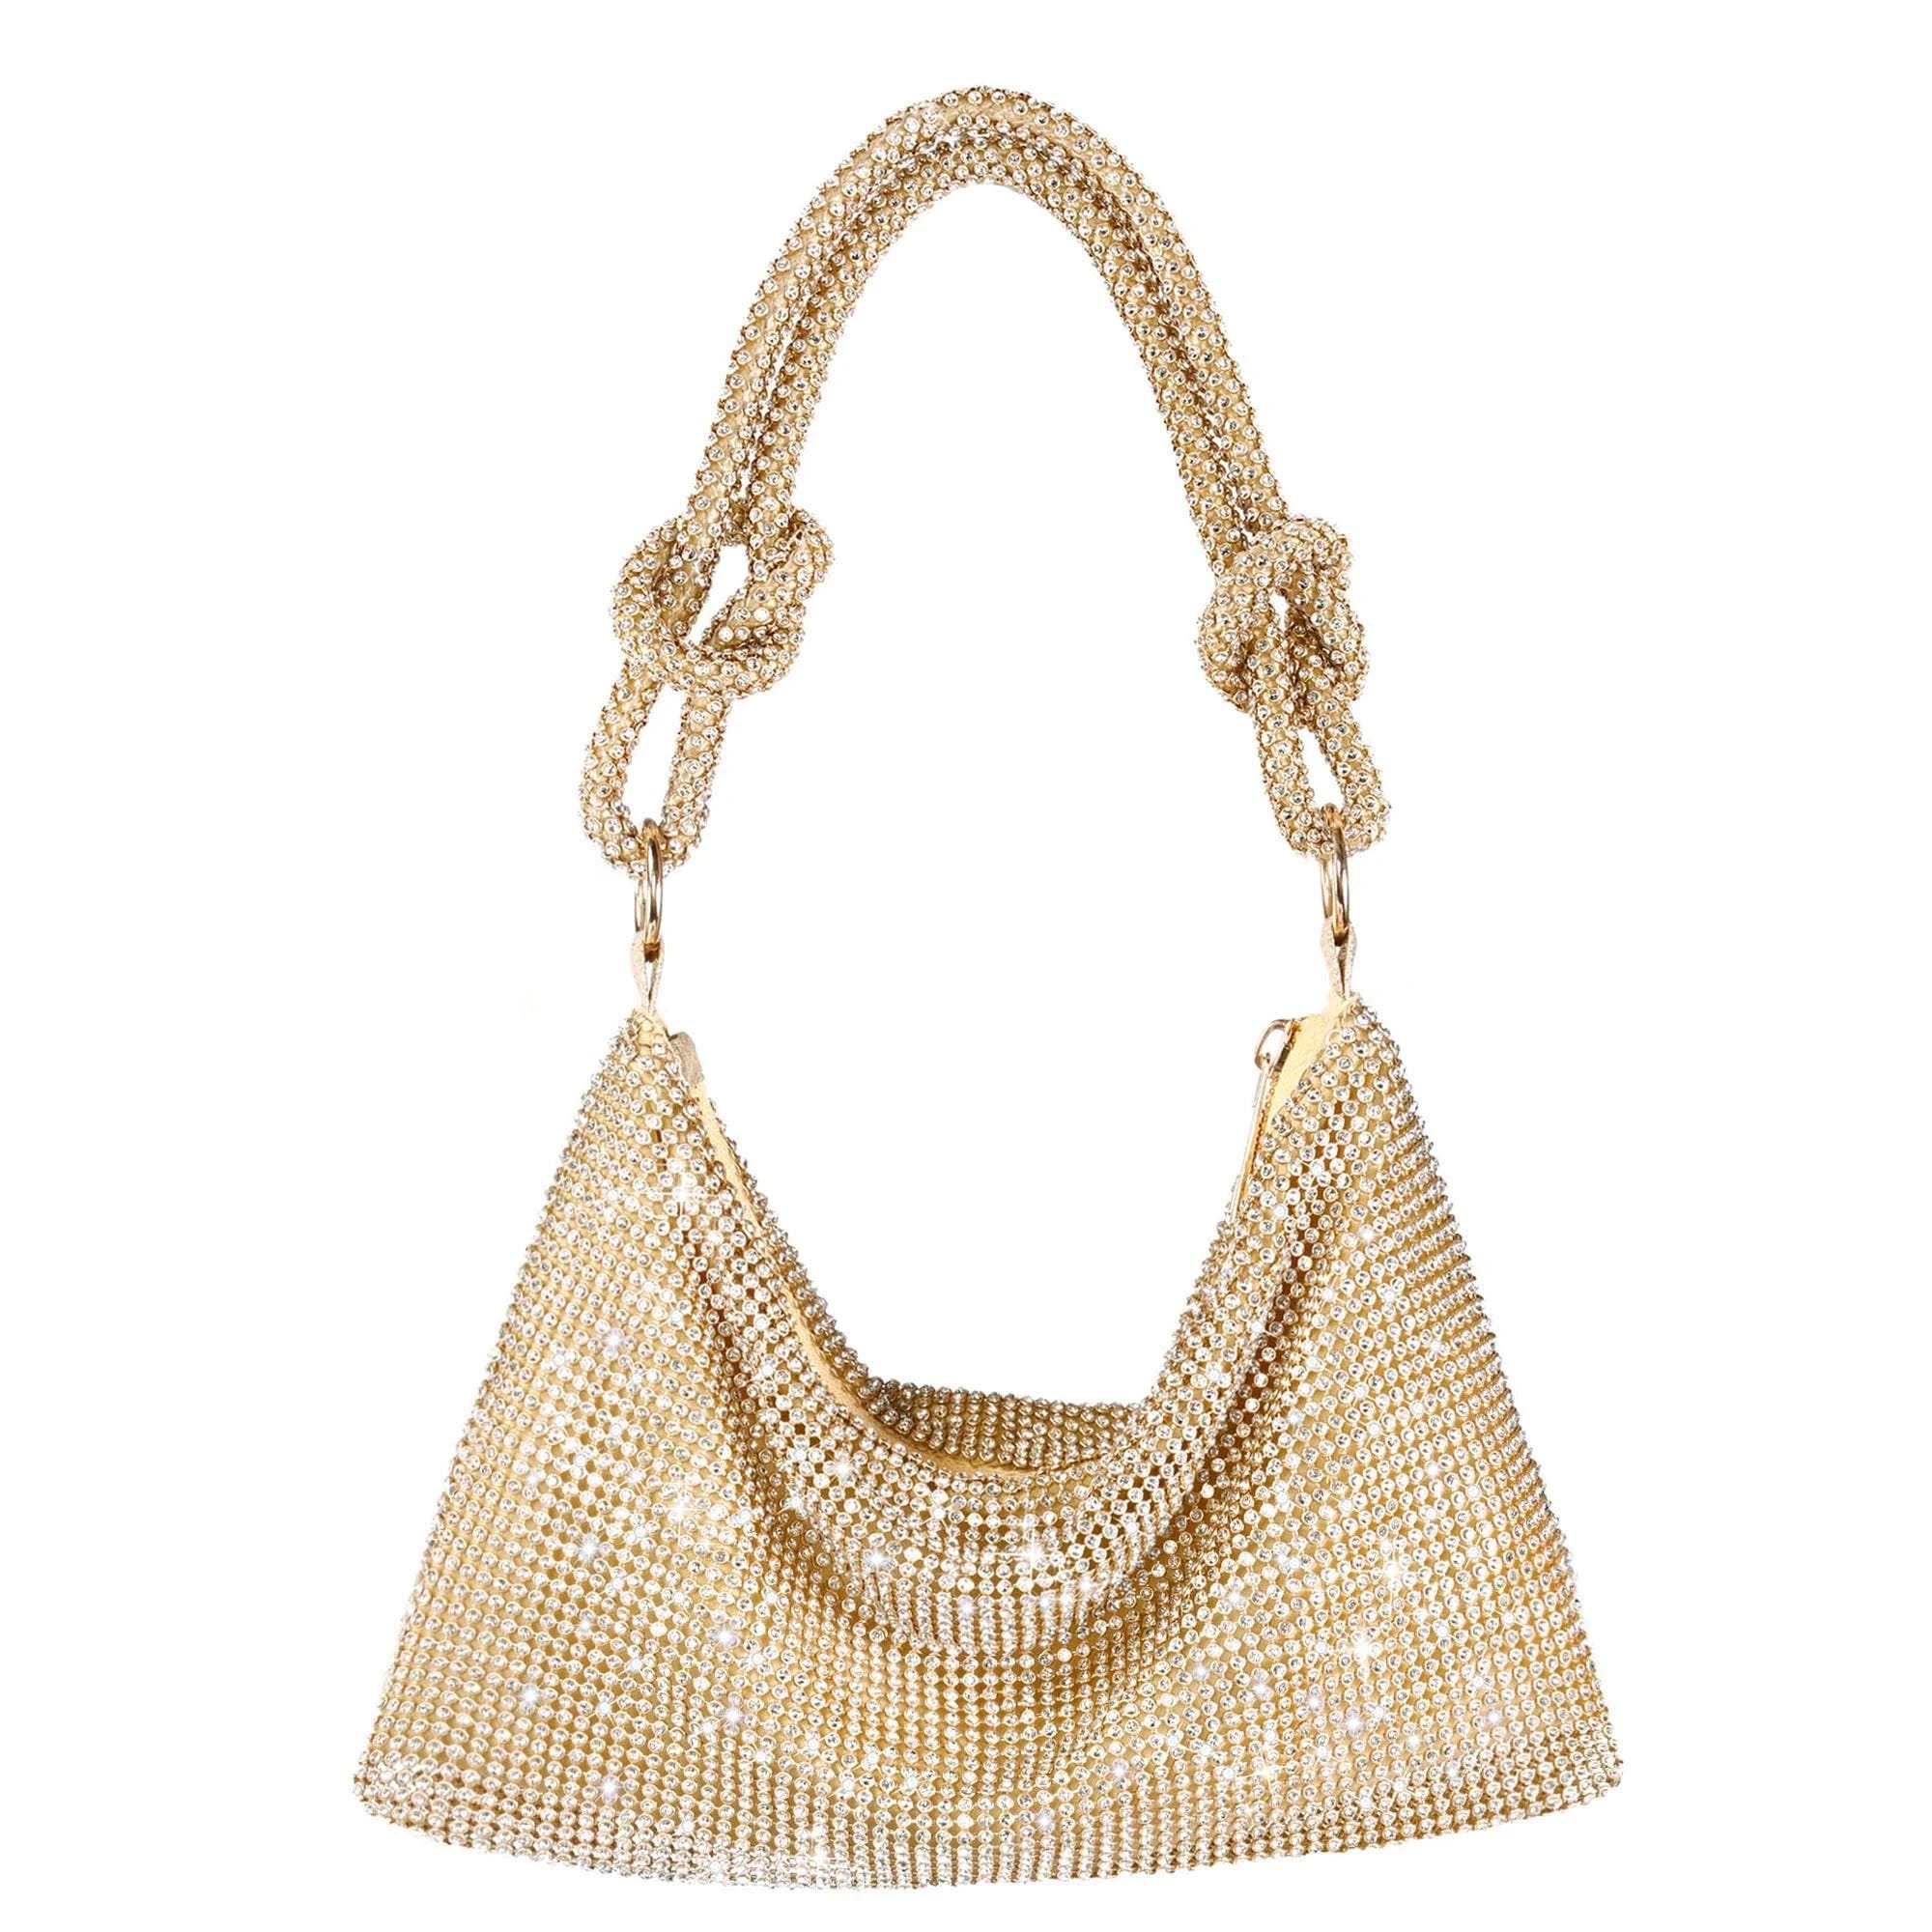 Sleek Rhinestone Gold Clutch Purses for Women - Versatile & Fashionable Evening Accessory | Image